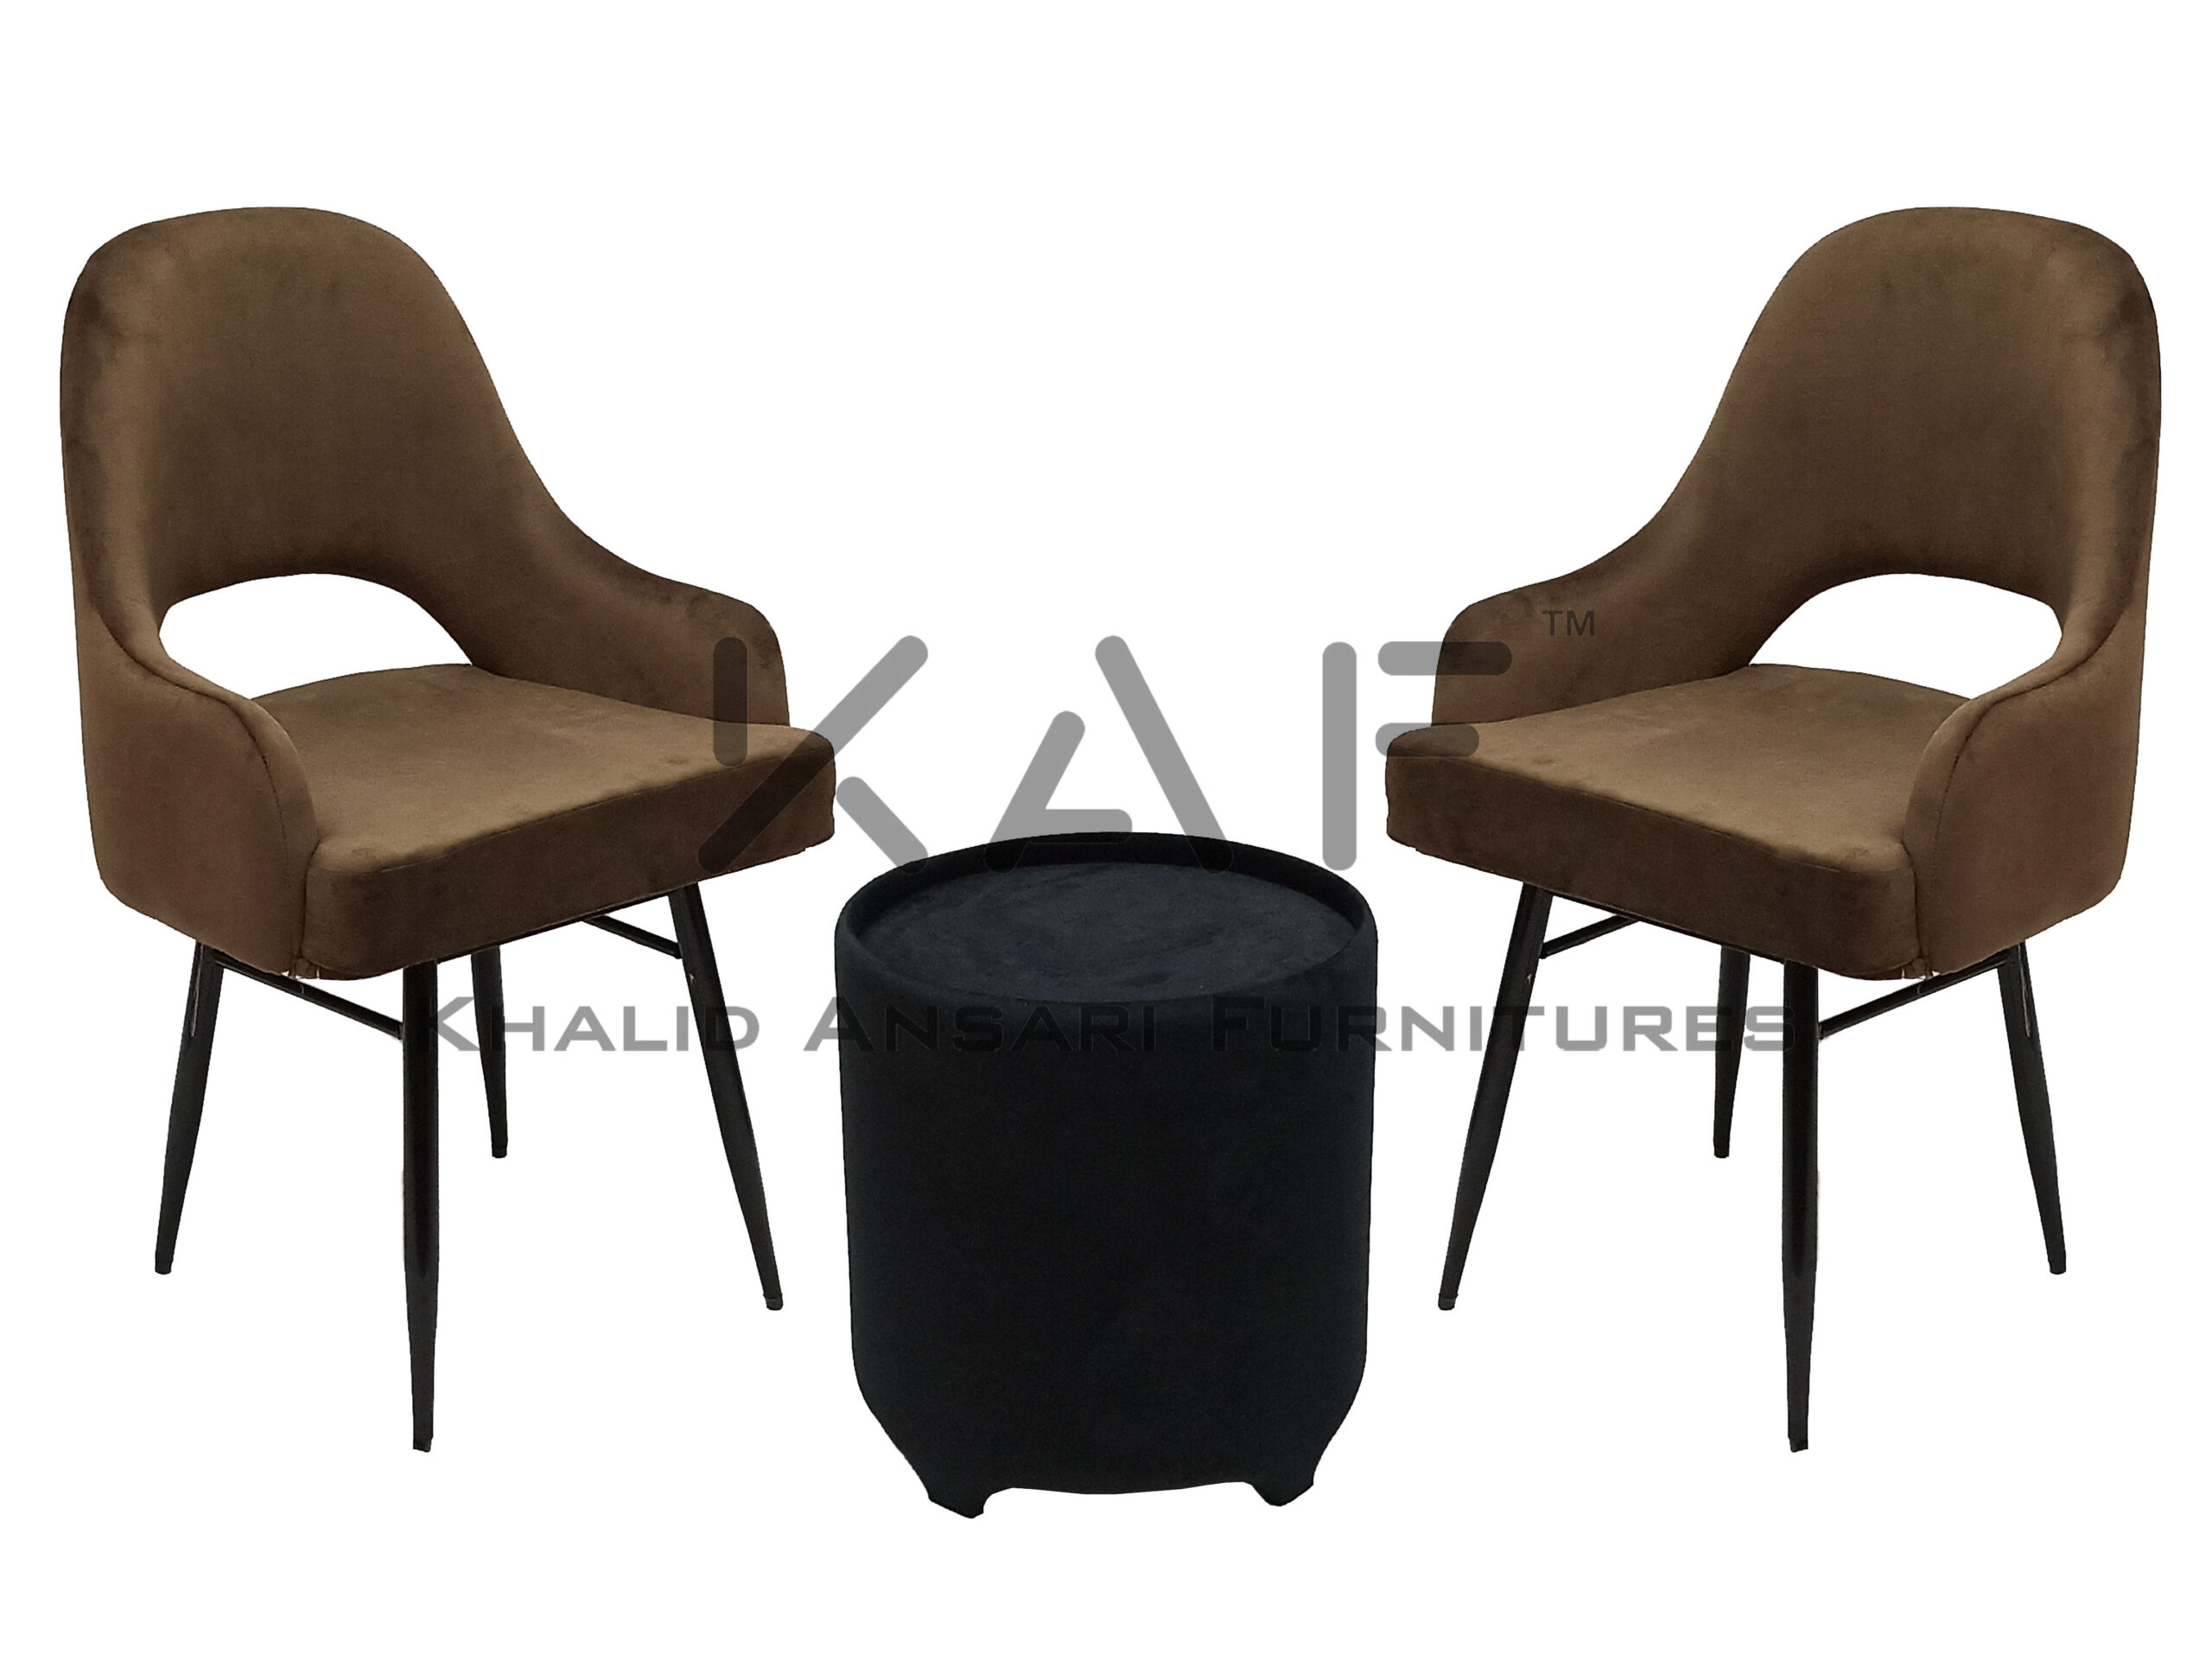 Bed Room Premium Chair Arm Hole Design Brown Velvet set with Black Velvet Tea Table - 2 Chairs + 1 Table